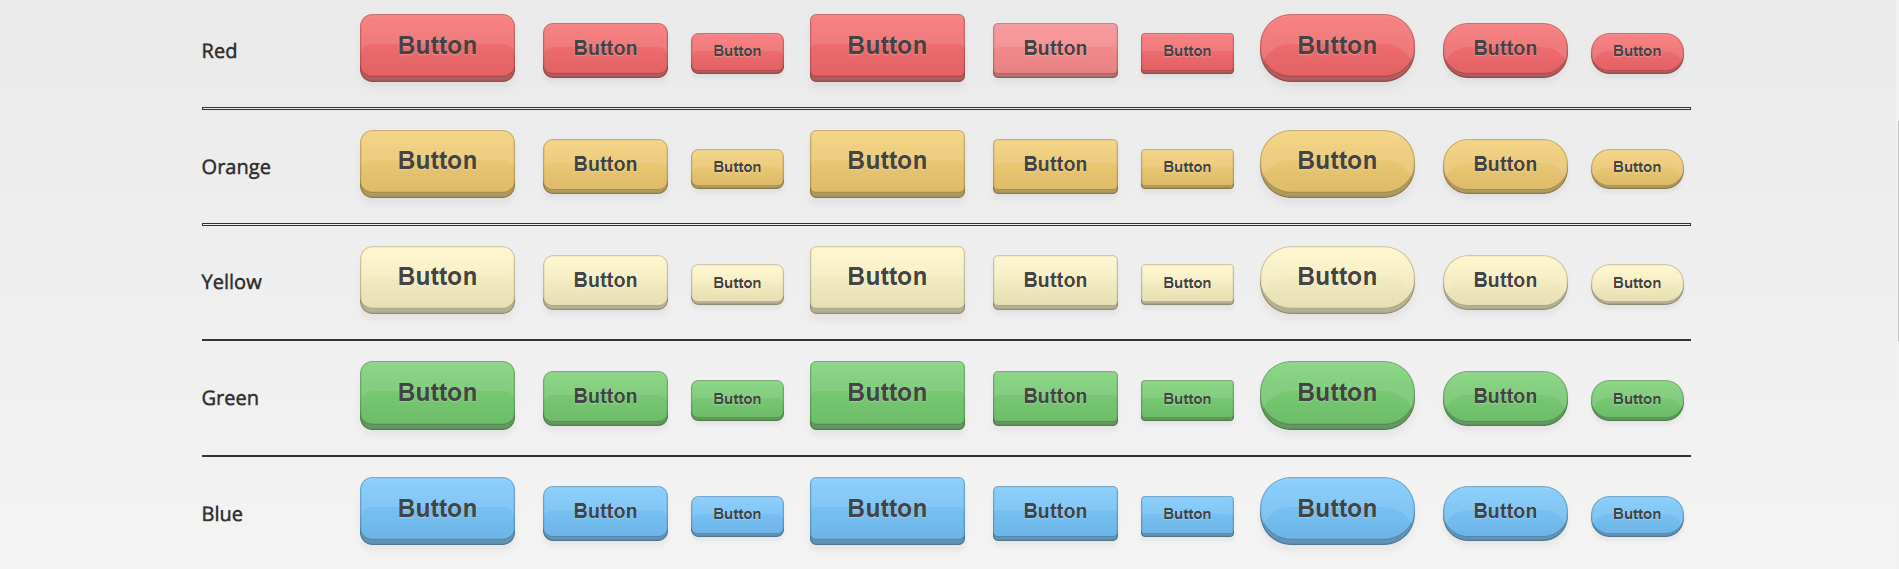 Pressable CSS Buttons